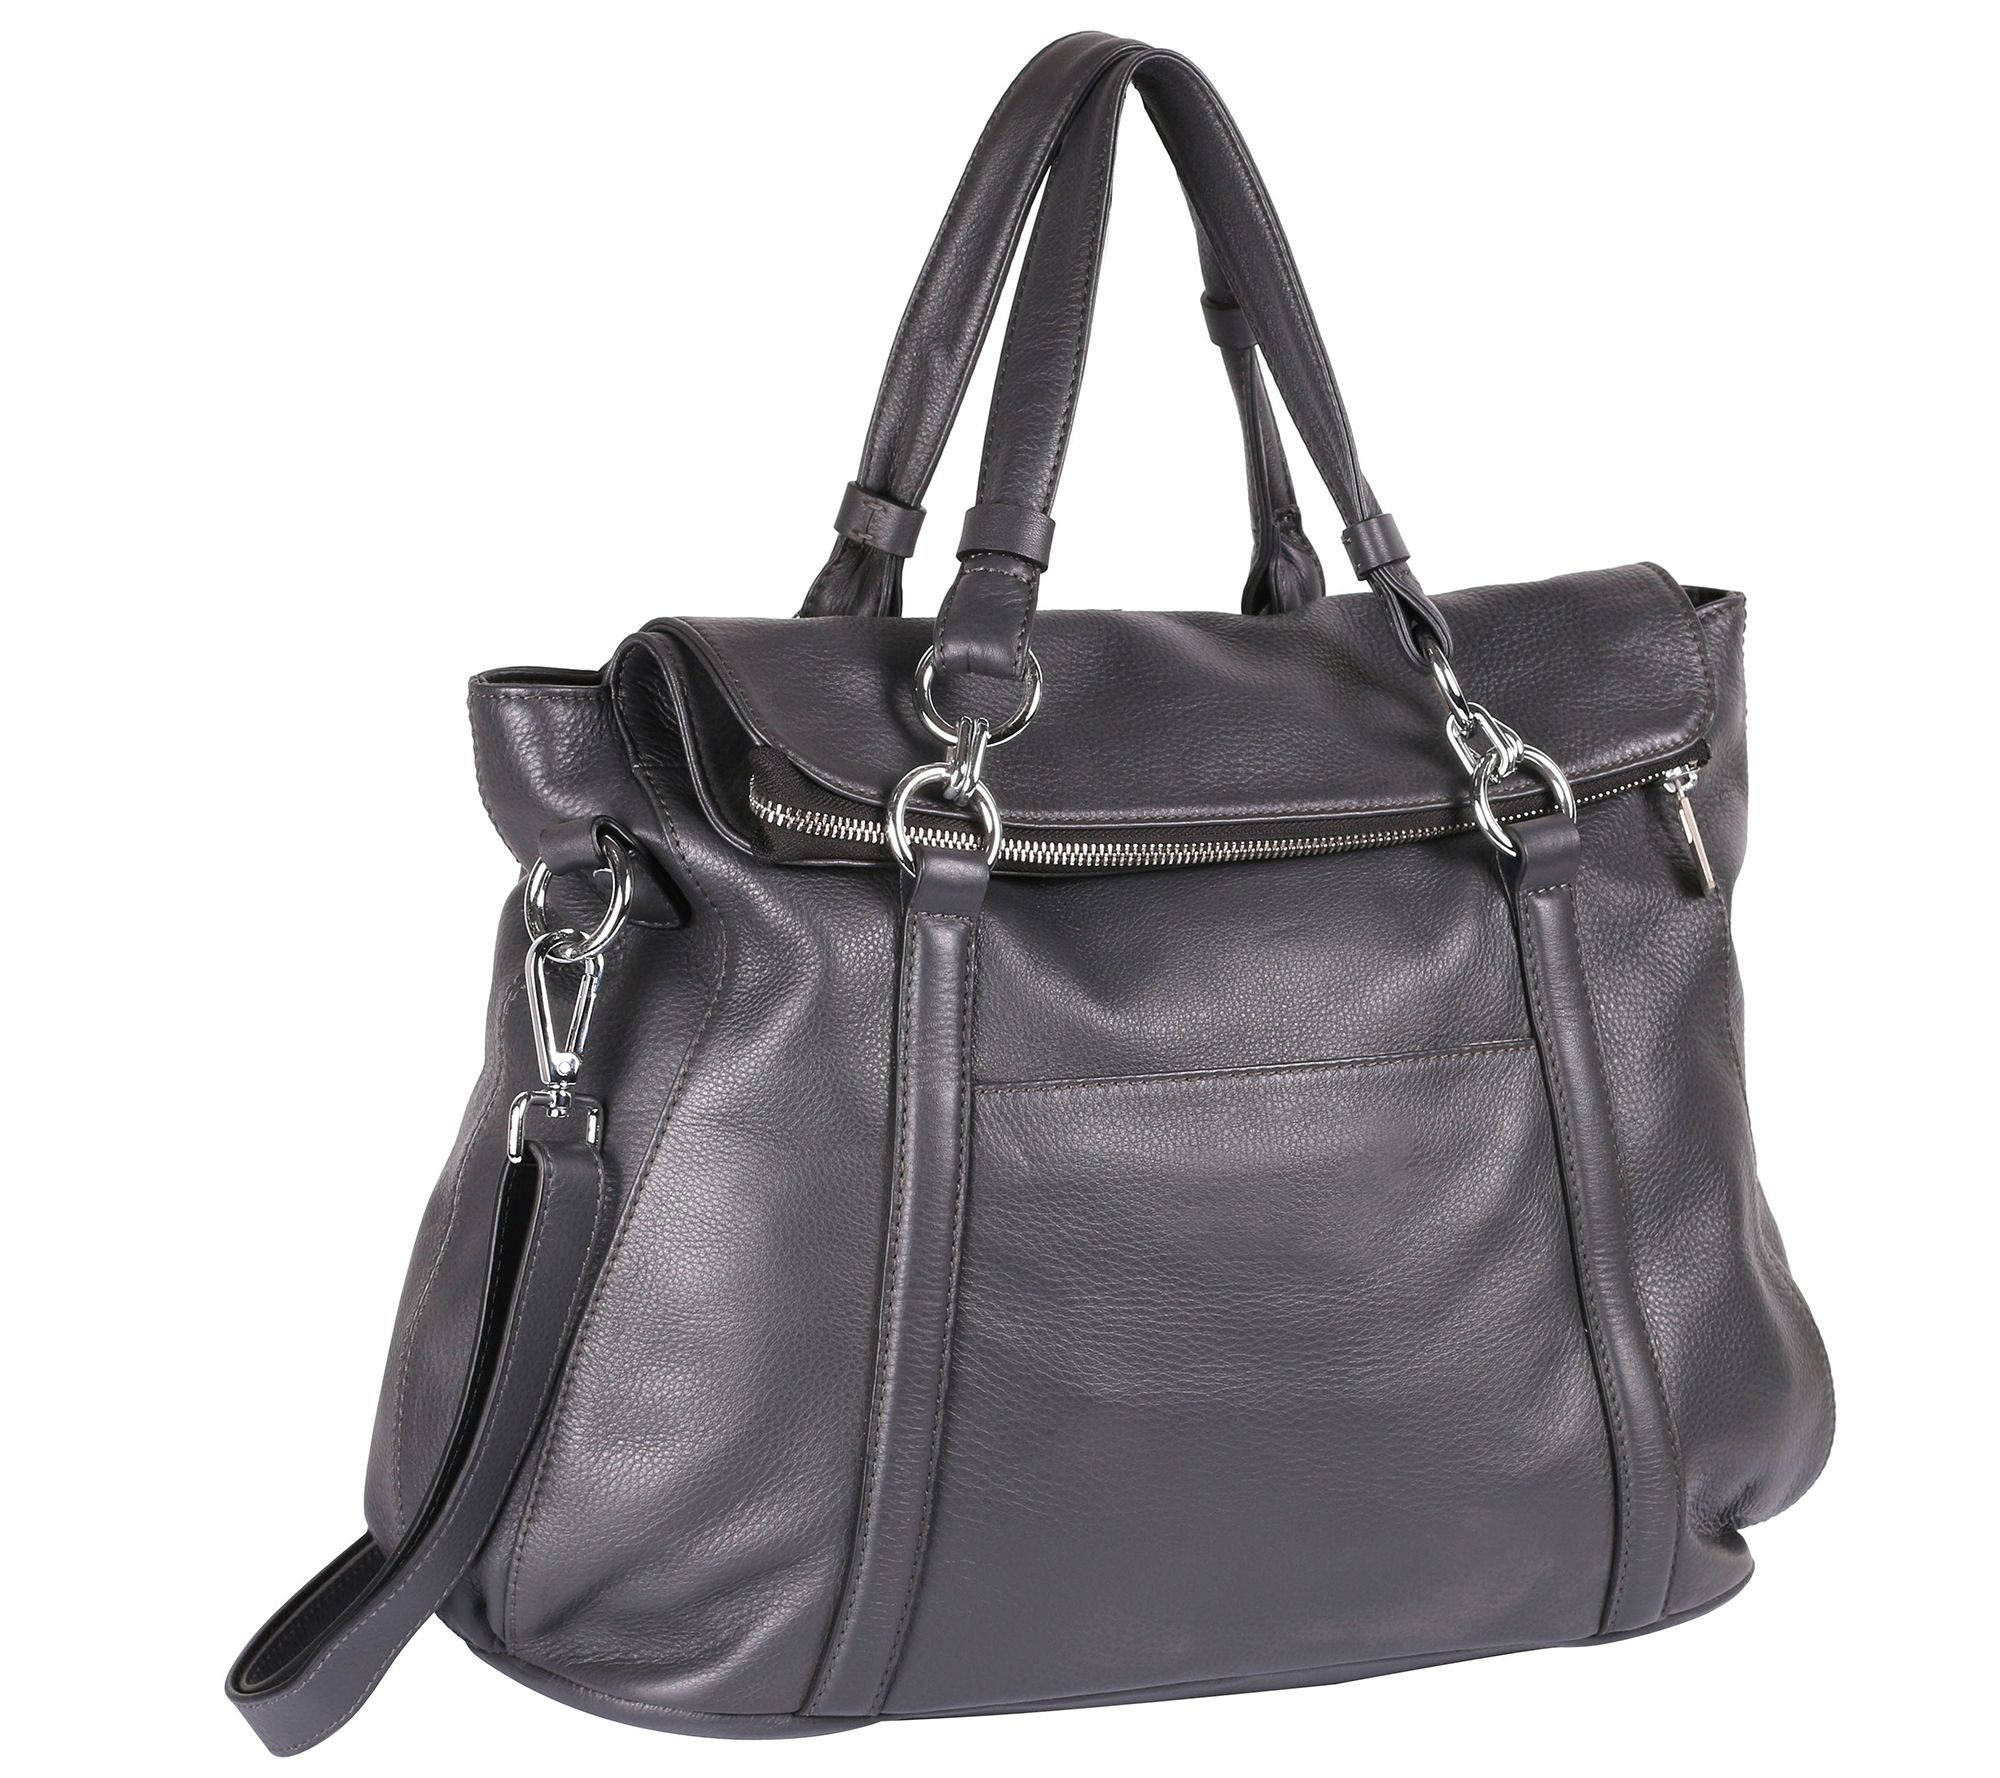 Karla Hanson Irene Leather Large Satchel Bag - QVC.com